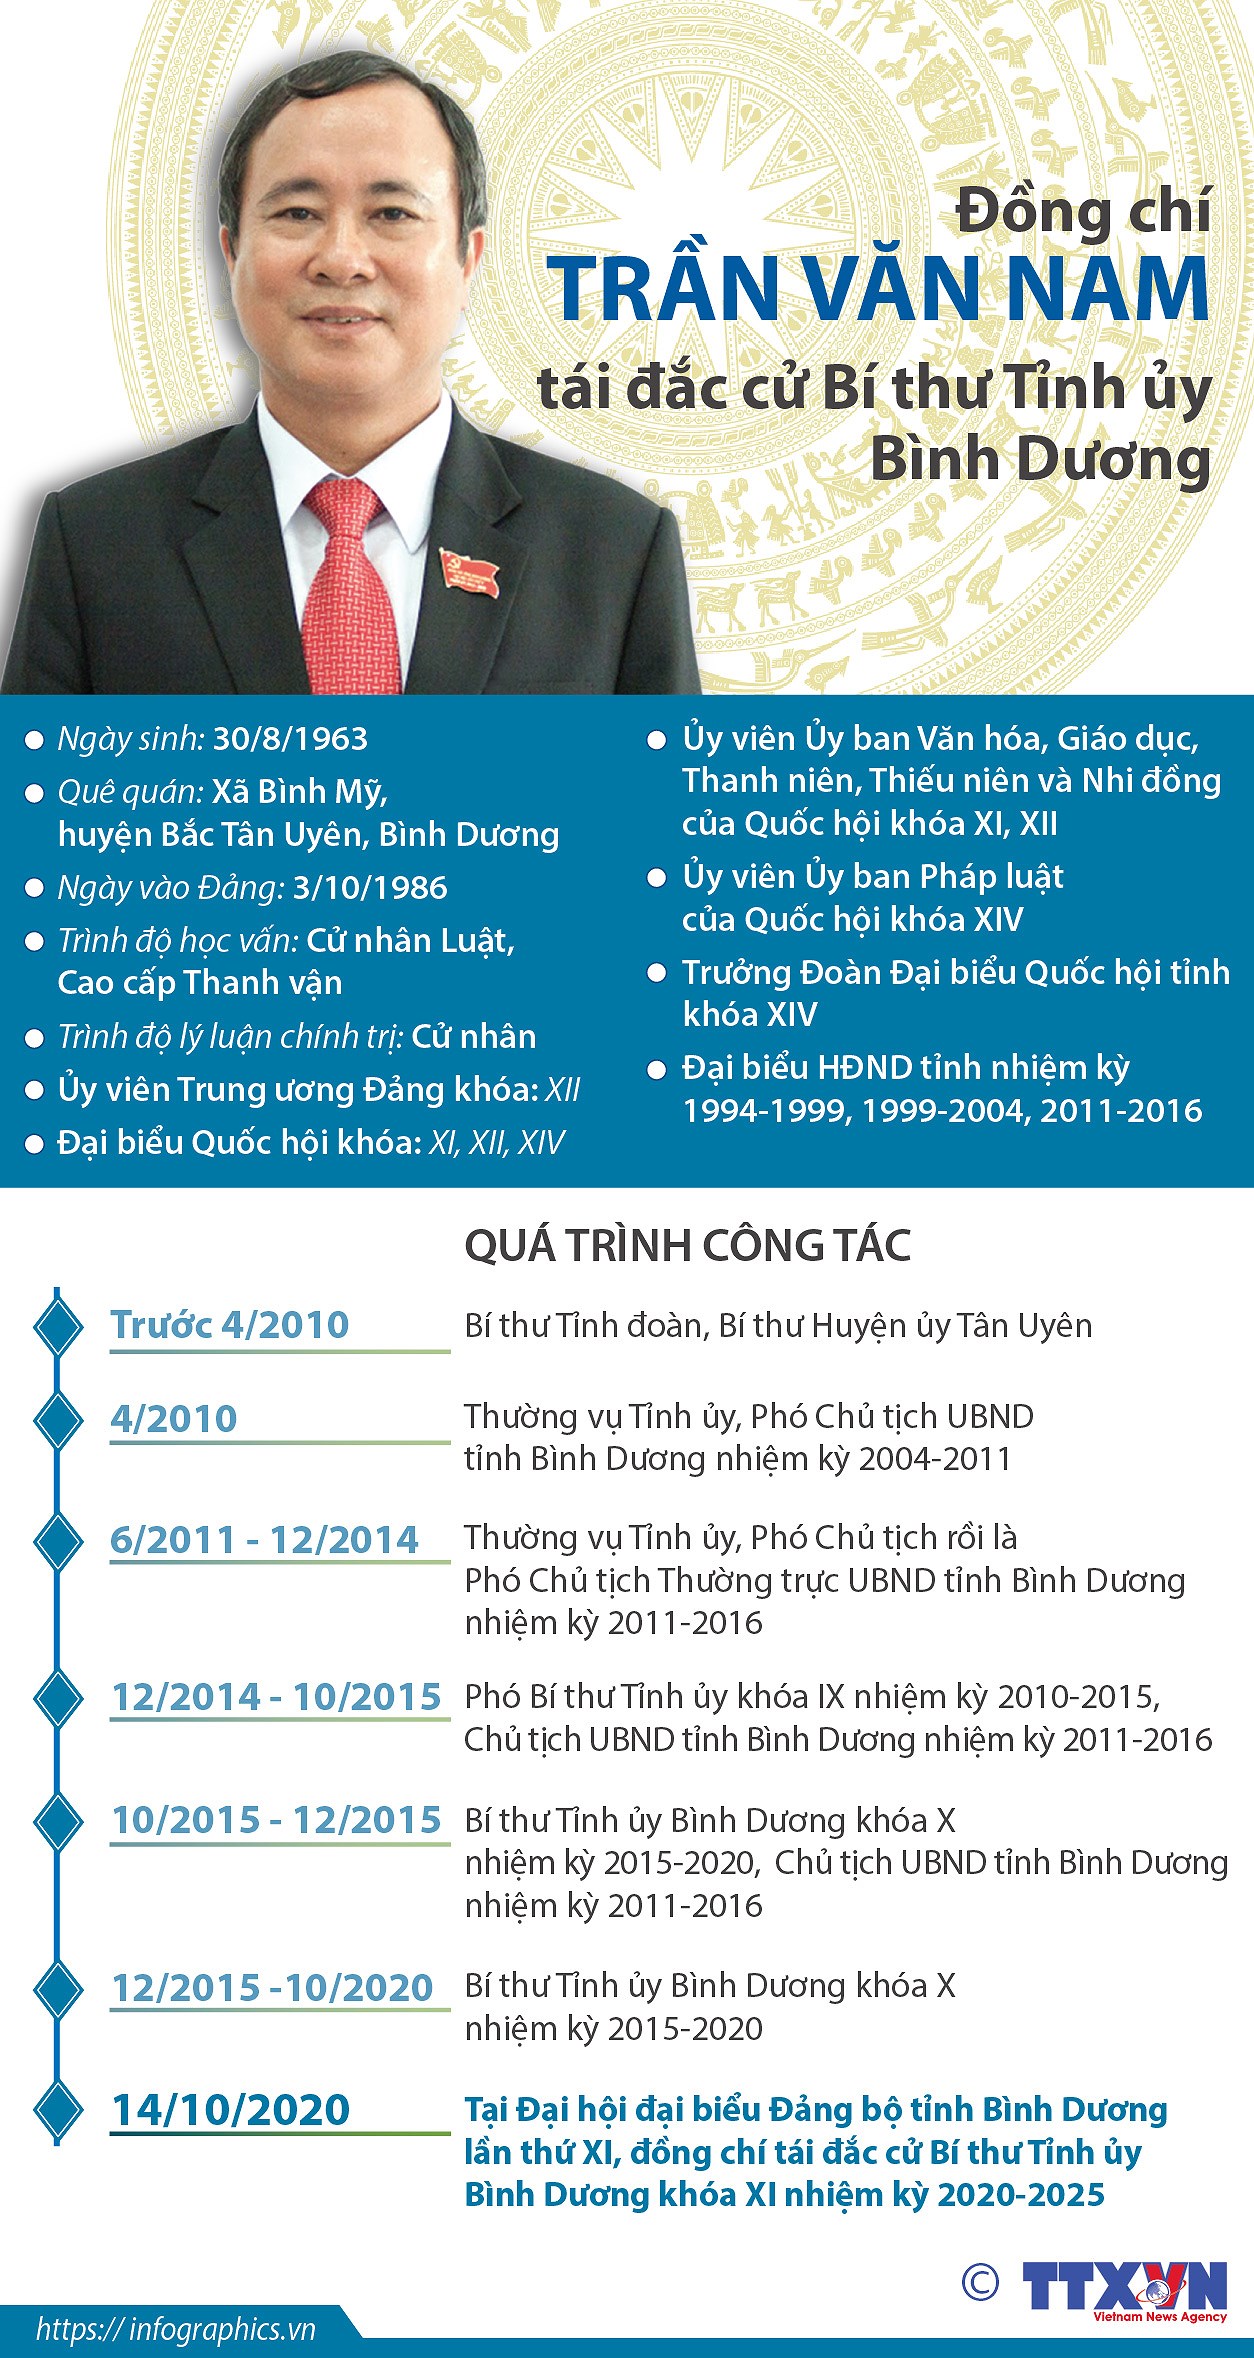 [Infographics] Ong Tran Van Nam tai dac cu Bi thu Tinh uy Binh Duong hinh anh 1